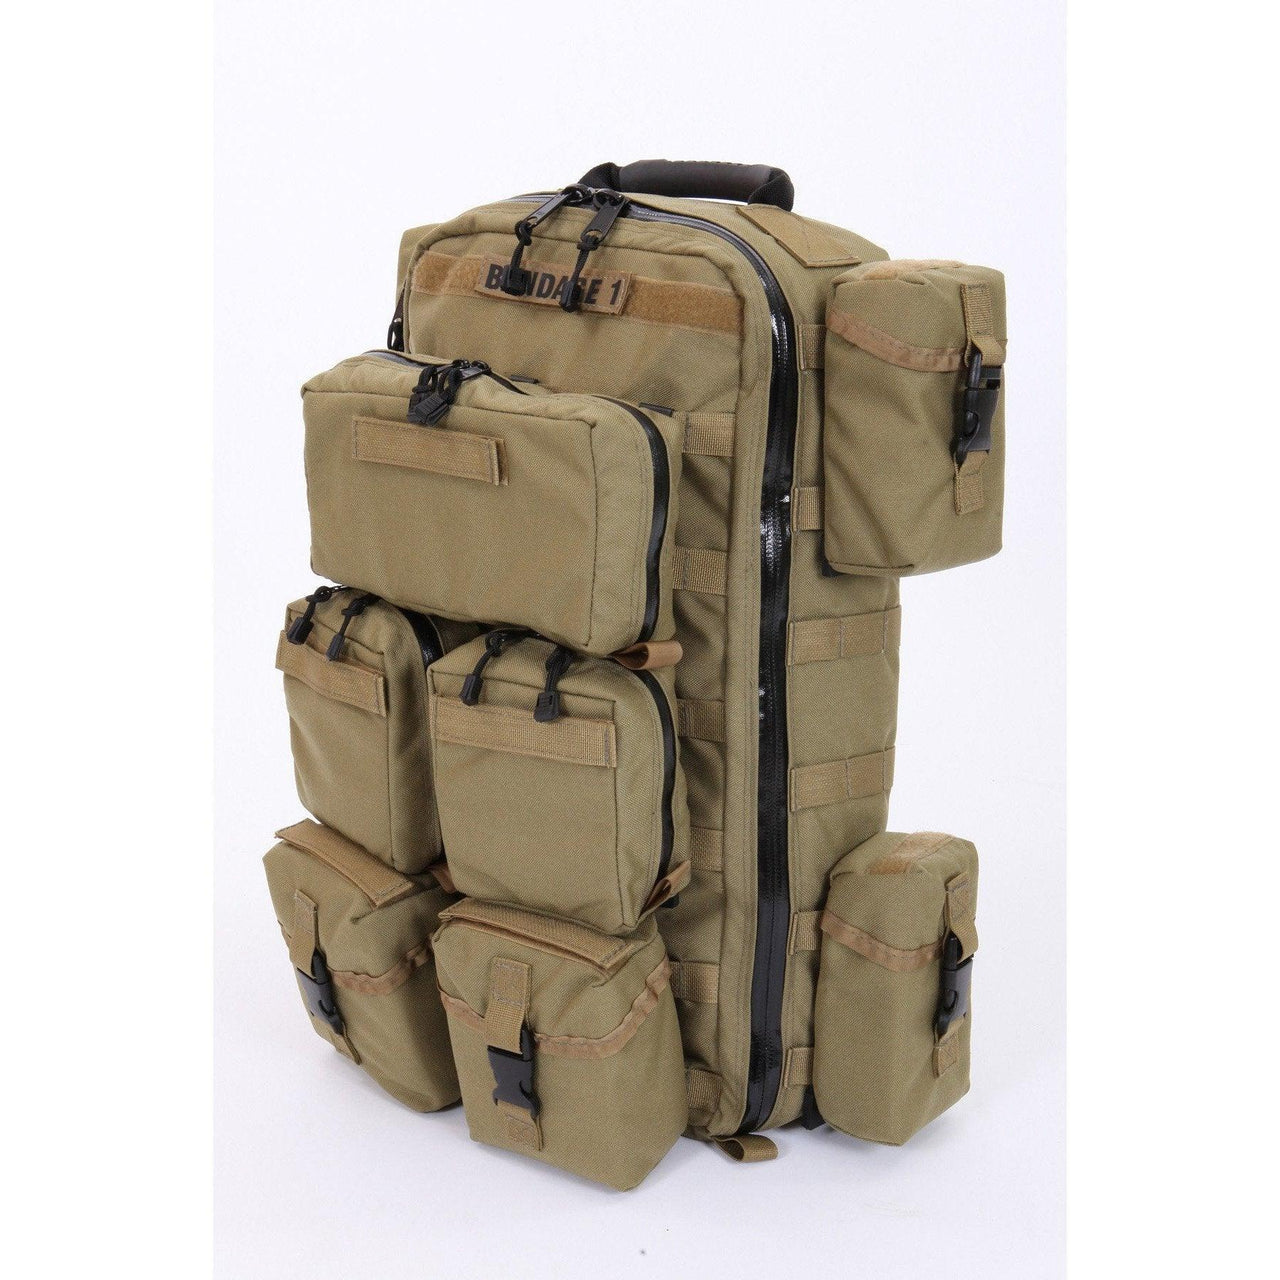 MED-TAC Tactical Medical Backpack w/Pouches - Vendor